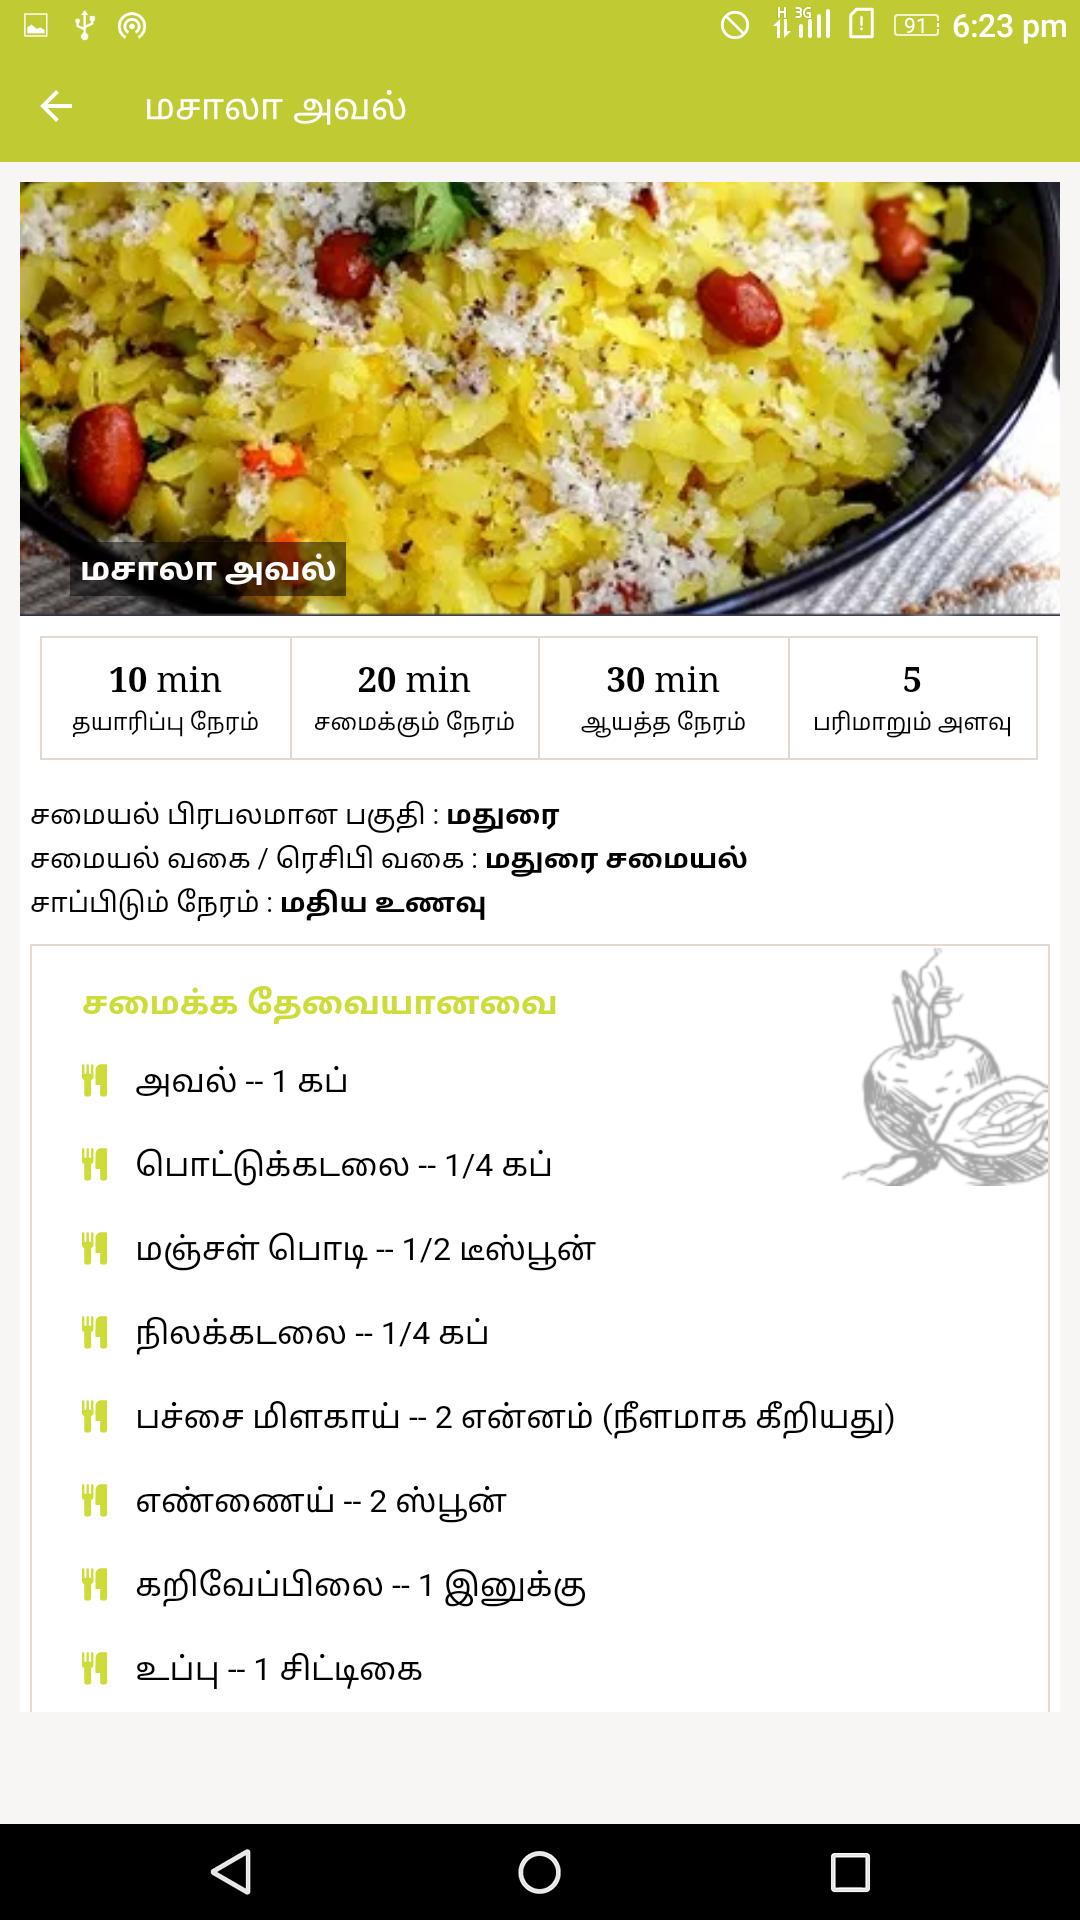 Madurai Special Food Recipes Madurai Samayal Tamil For Android Apk Download